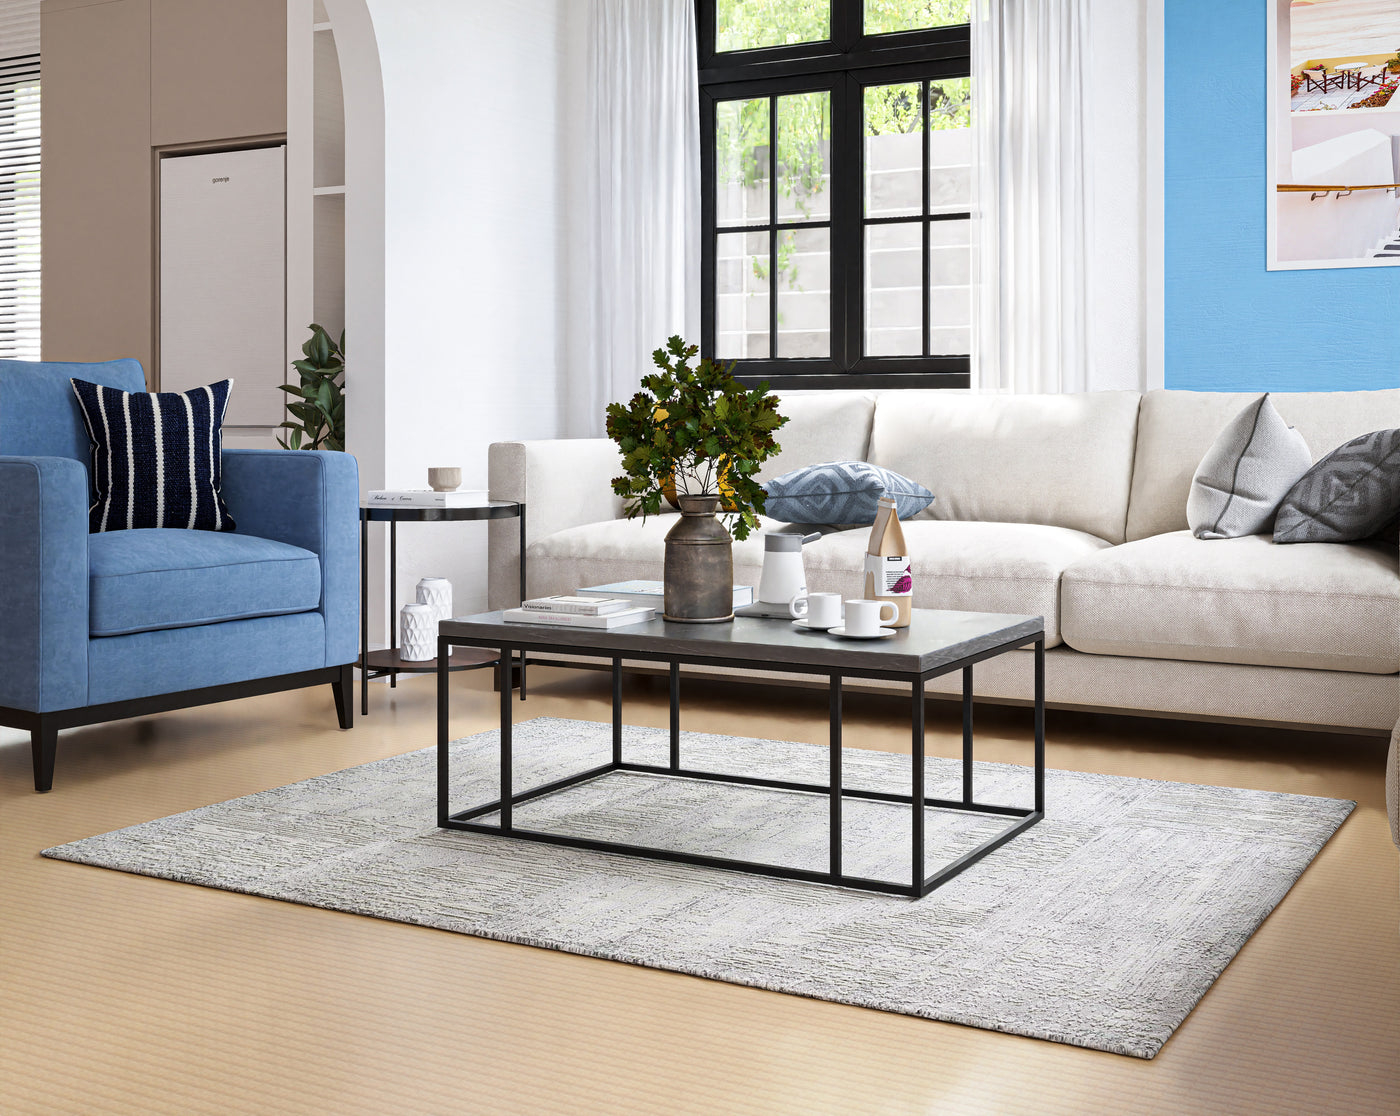 Comment Choisir le Tapis Salon Parfait / How to Choose the Perfect Living Room Rug